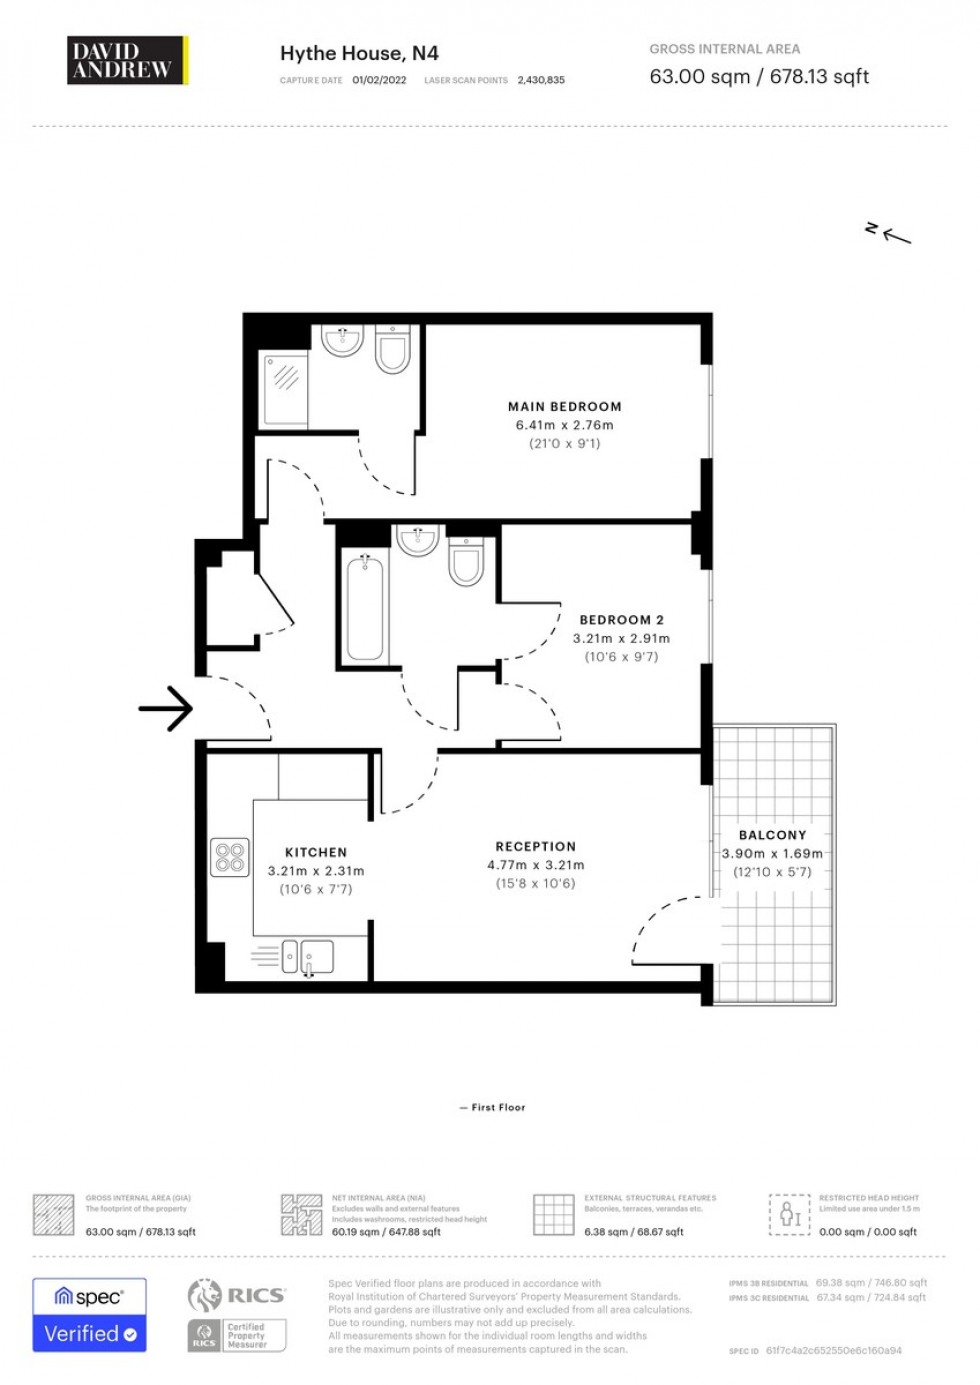 Floorplan for Hythe house ,Woodberry Down, N4 2GA